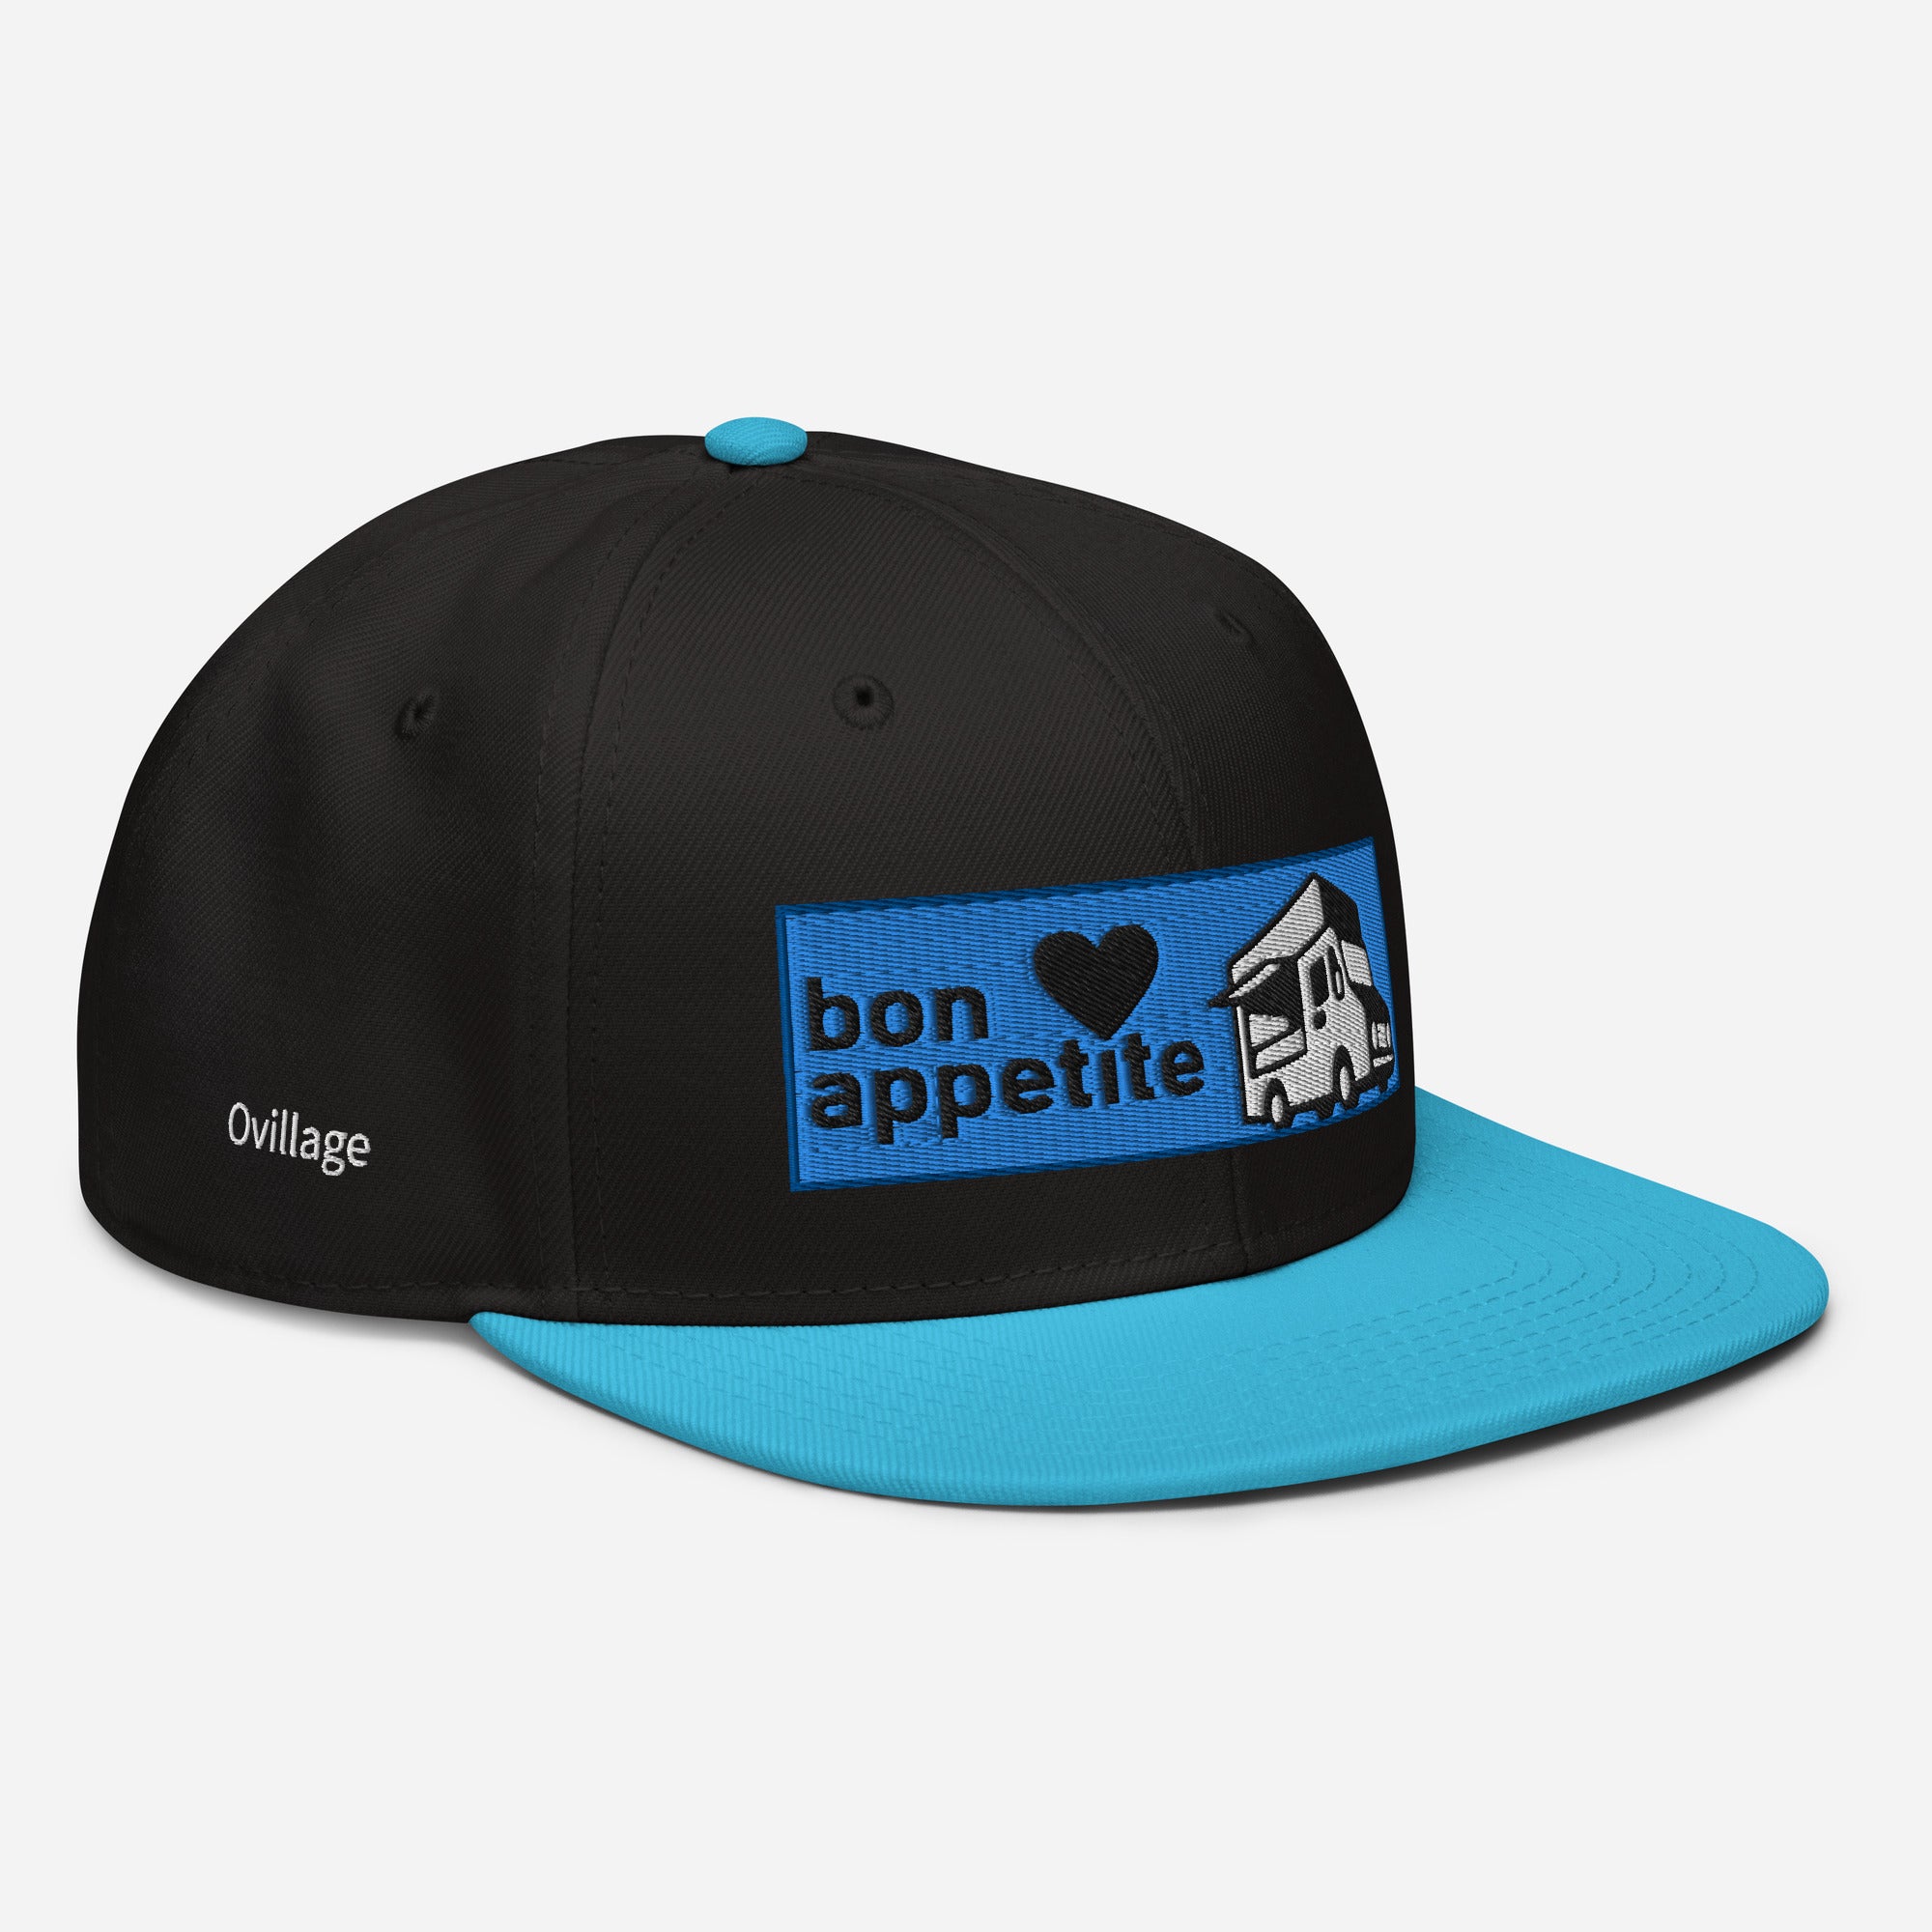 Snapback Cap [Bon appetit2] Aqua blue / Black / Black